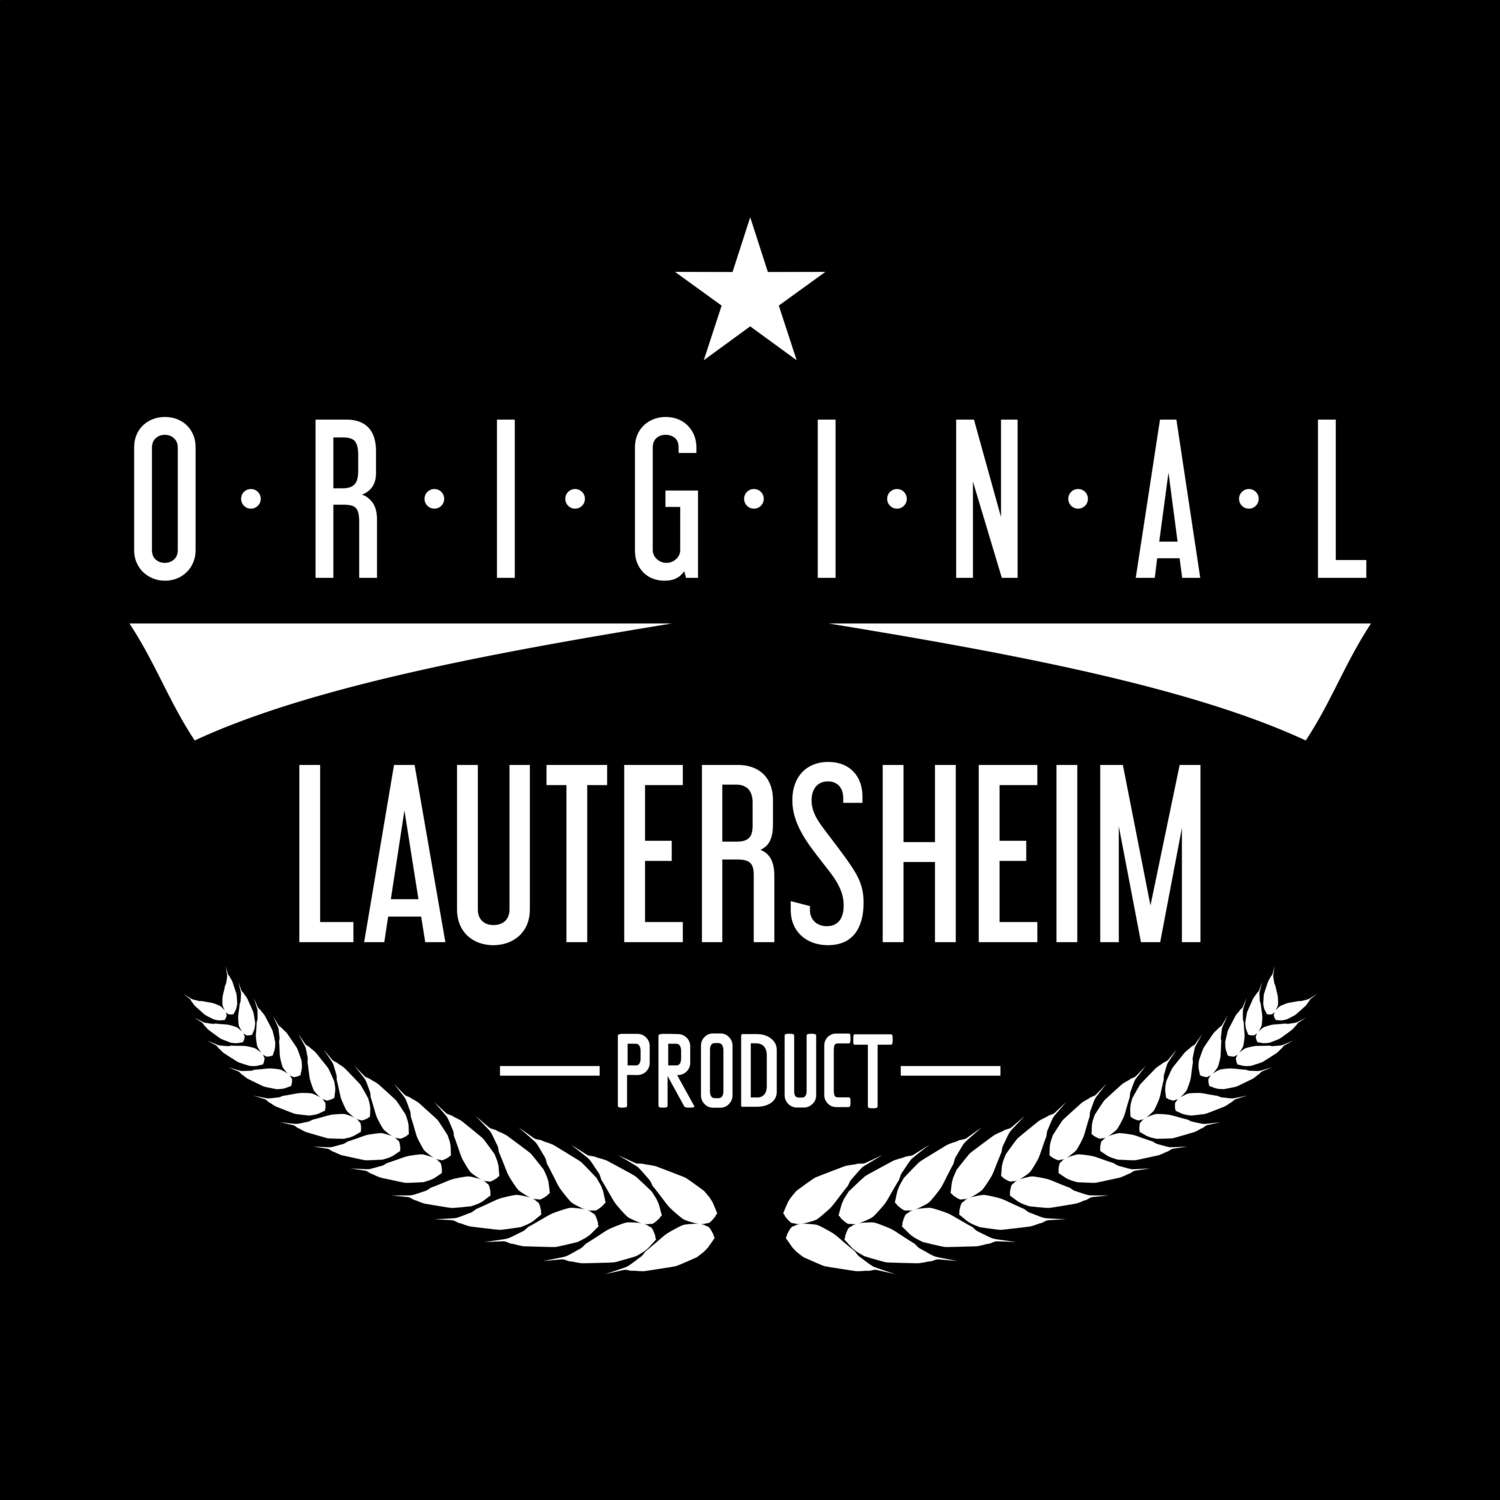 Lautersheim T-Shirt »Original Product«